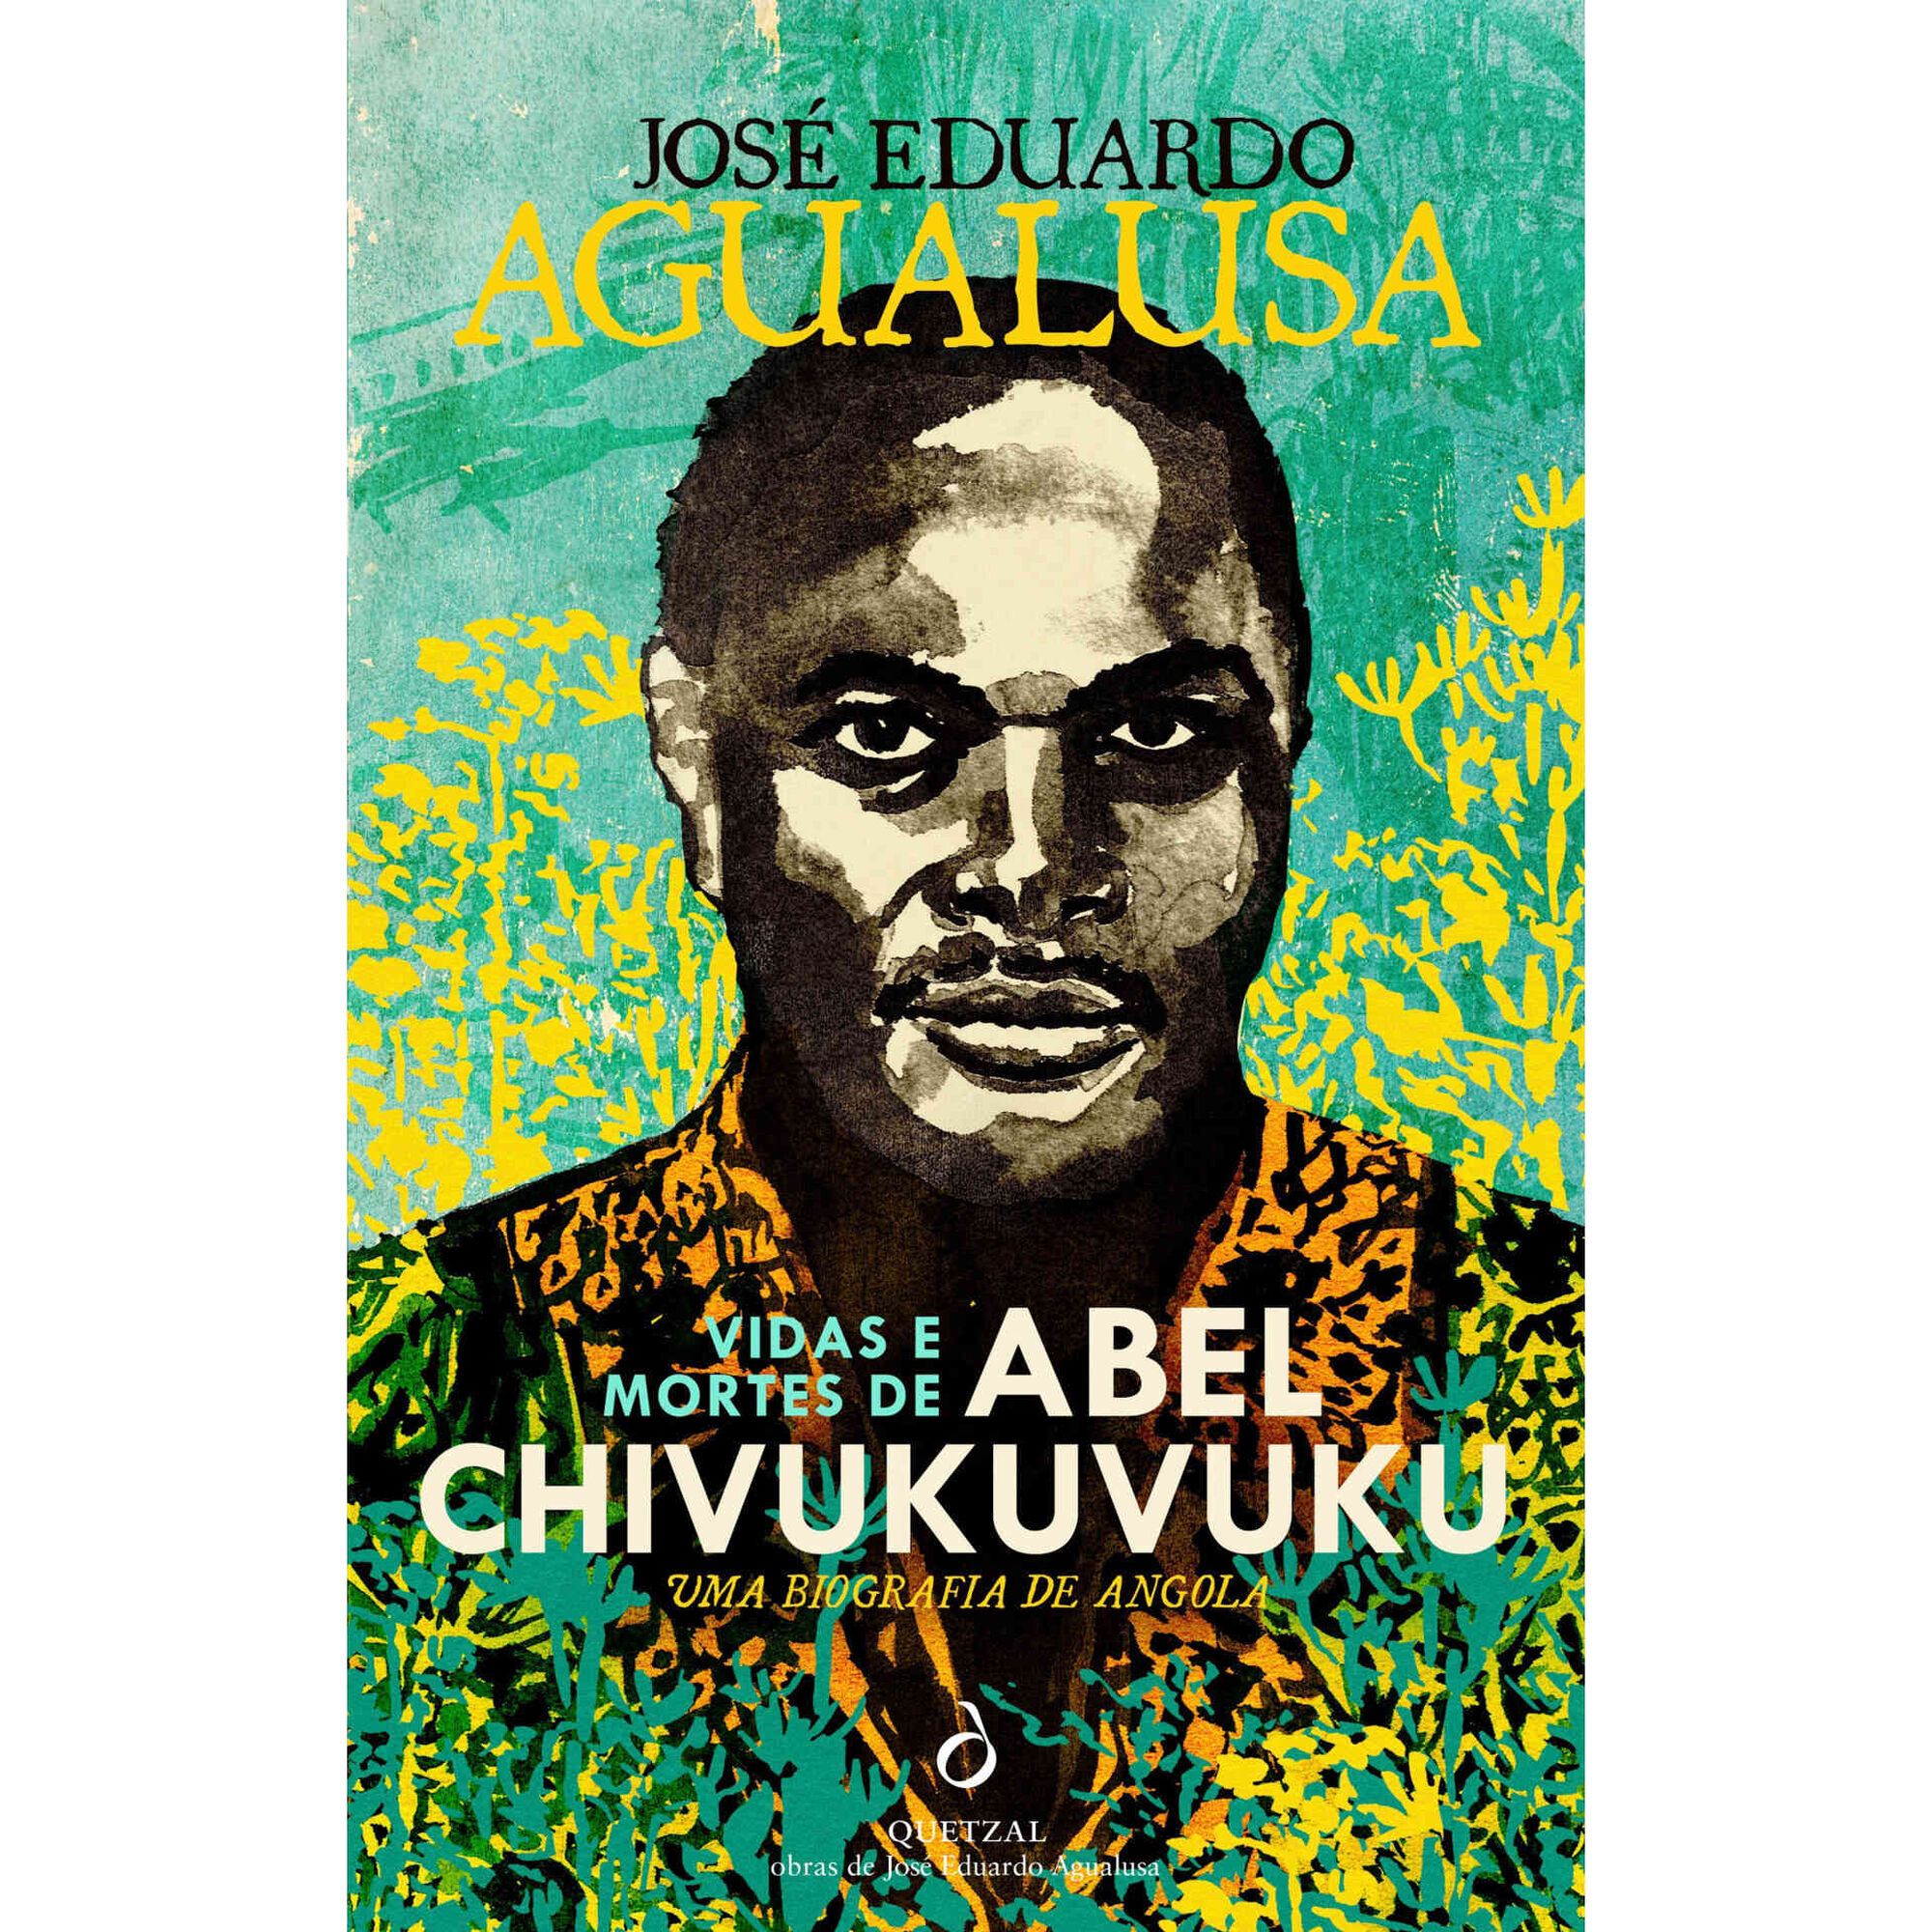 Vidas e Mortes de Abel Chivukuvuku